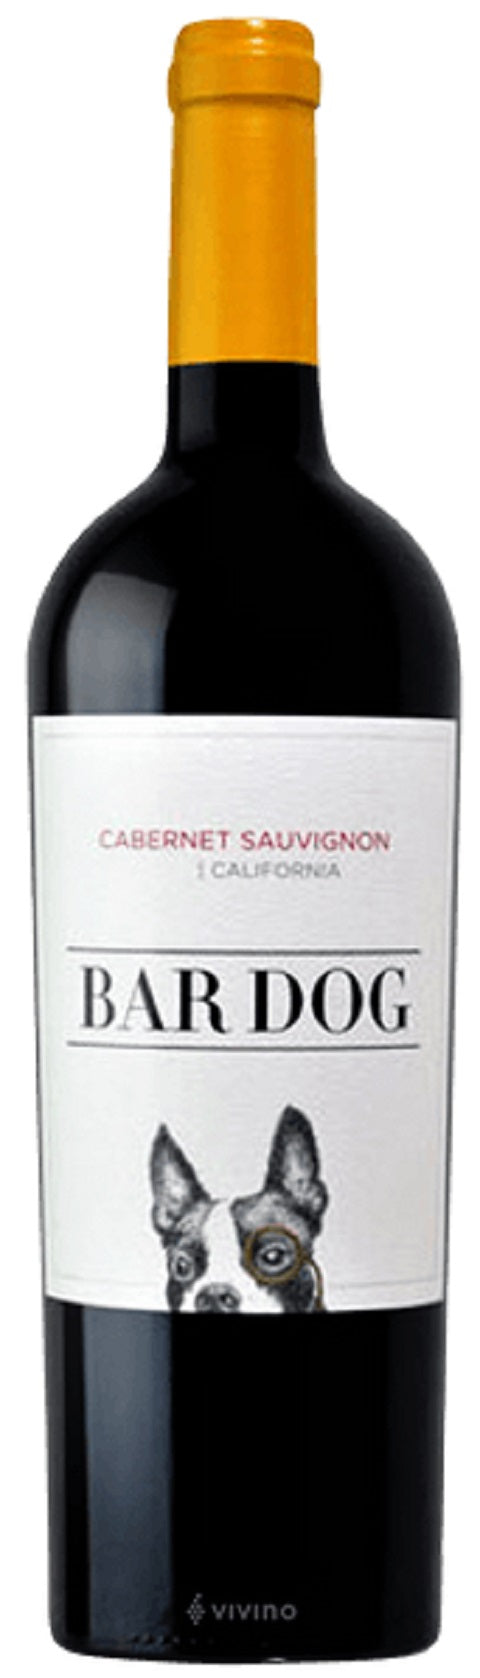 Bar Dog Cabernet Sauvignon 2018